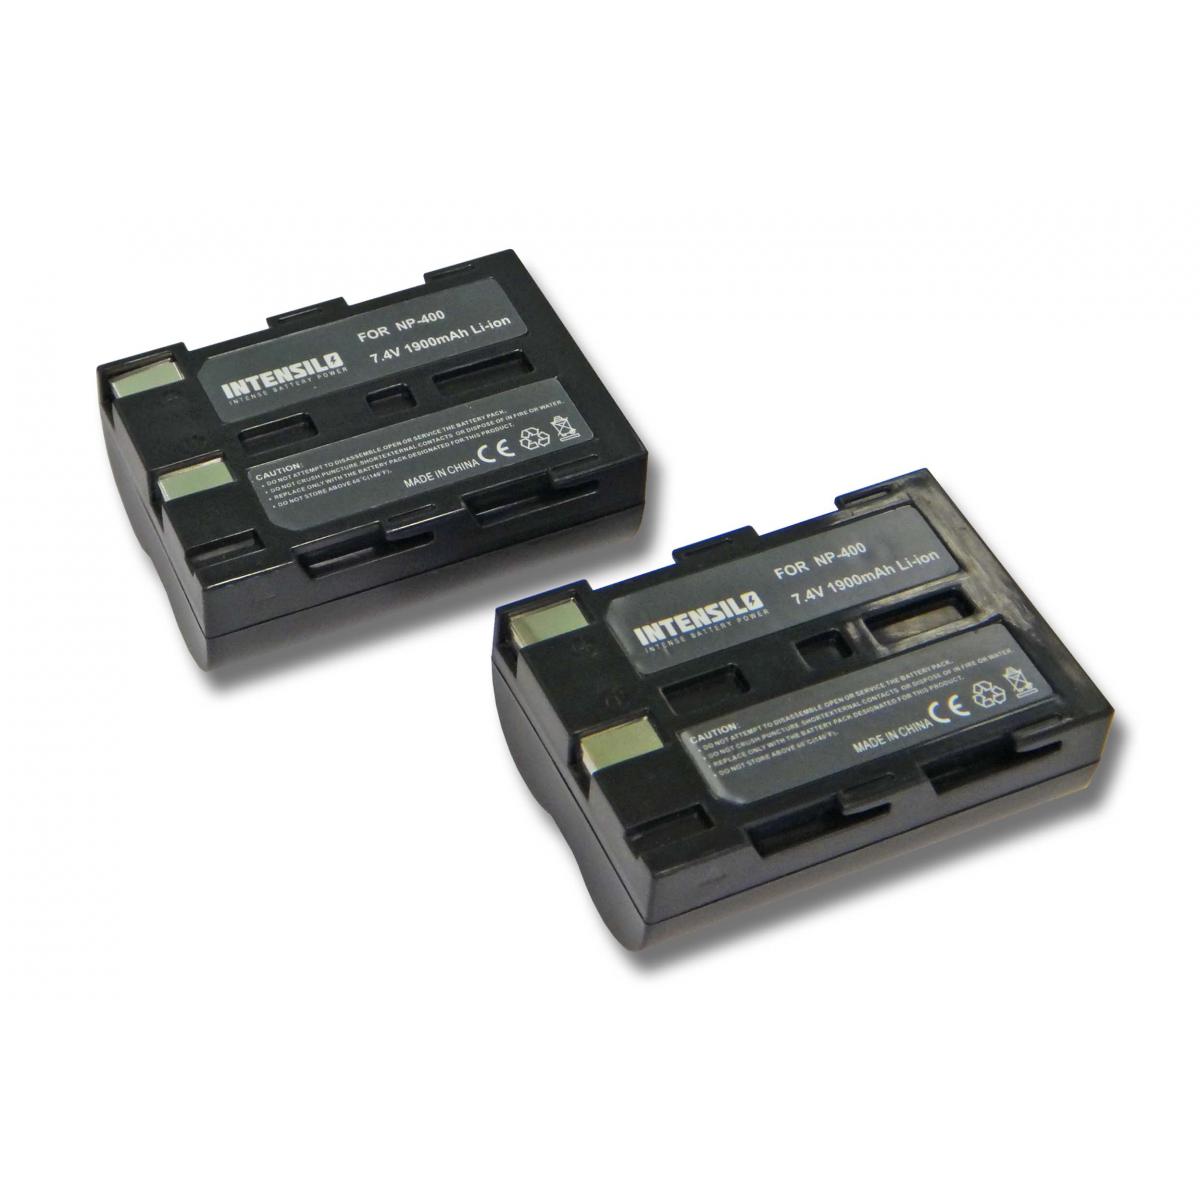 Vhbw INTENSILO 2x Li-Ion Batterie 1900mAh (7.4V) pour appareil photo, caméscope, caméra vidéo Sigma SD1, SD14, SD15 comme NP-